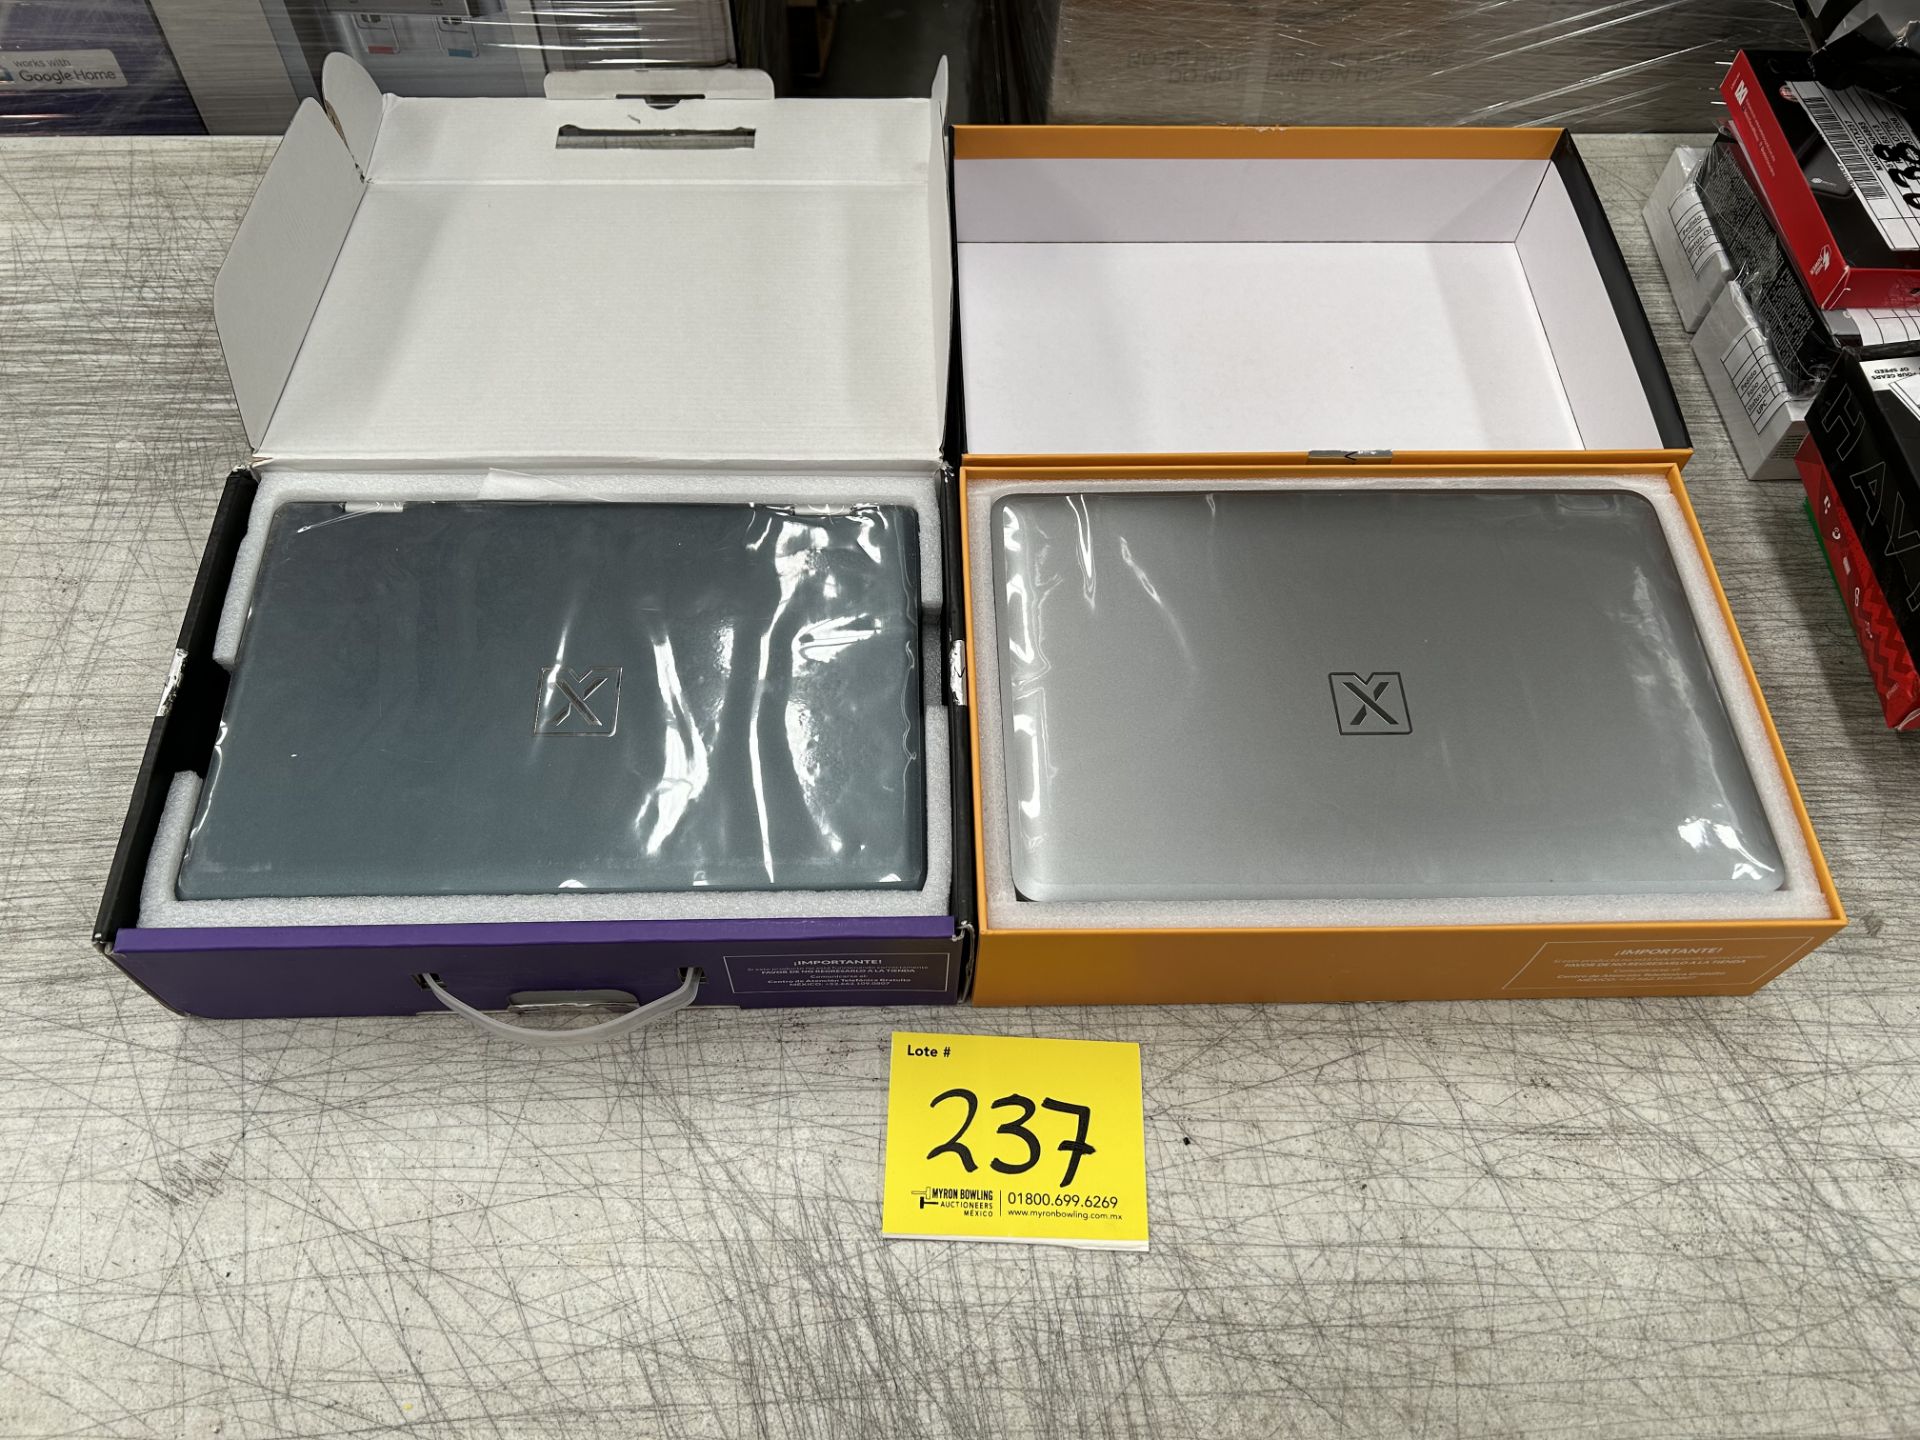 Lote de 2 laptops contiene: 1 laptop Marca LANIX, Modelo NEURON FLEX, 128 GB de almacenamiento, RAM